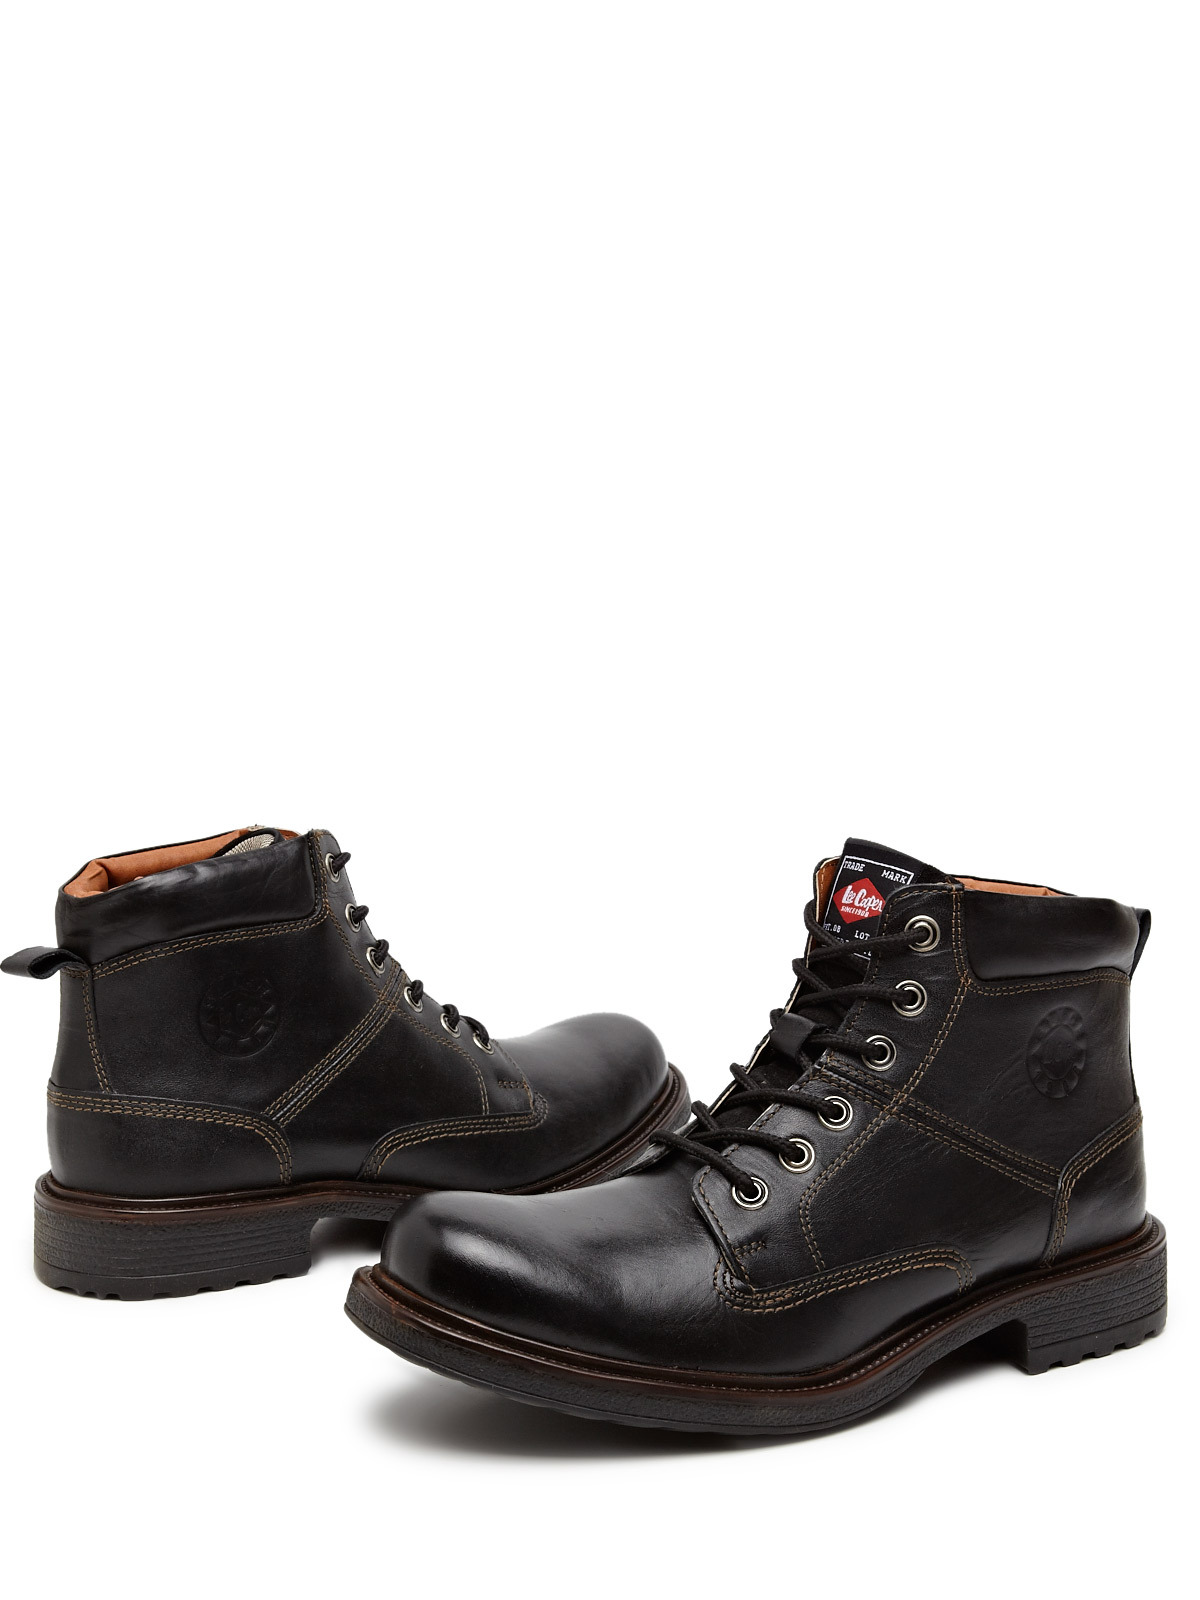 Online Lee Cooper Lee Cooper Major Tom Boots (Black) Prices - Shopclues ...